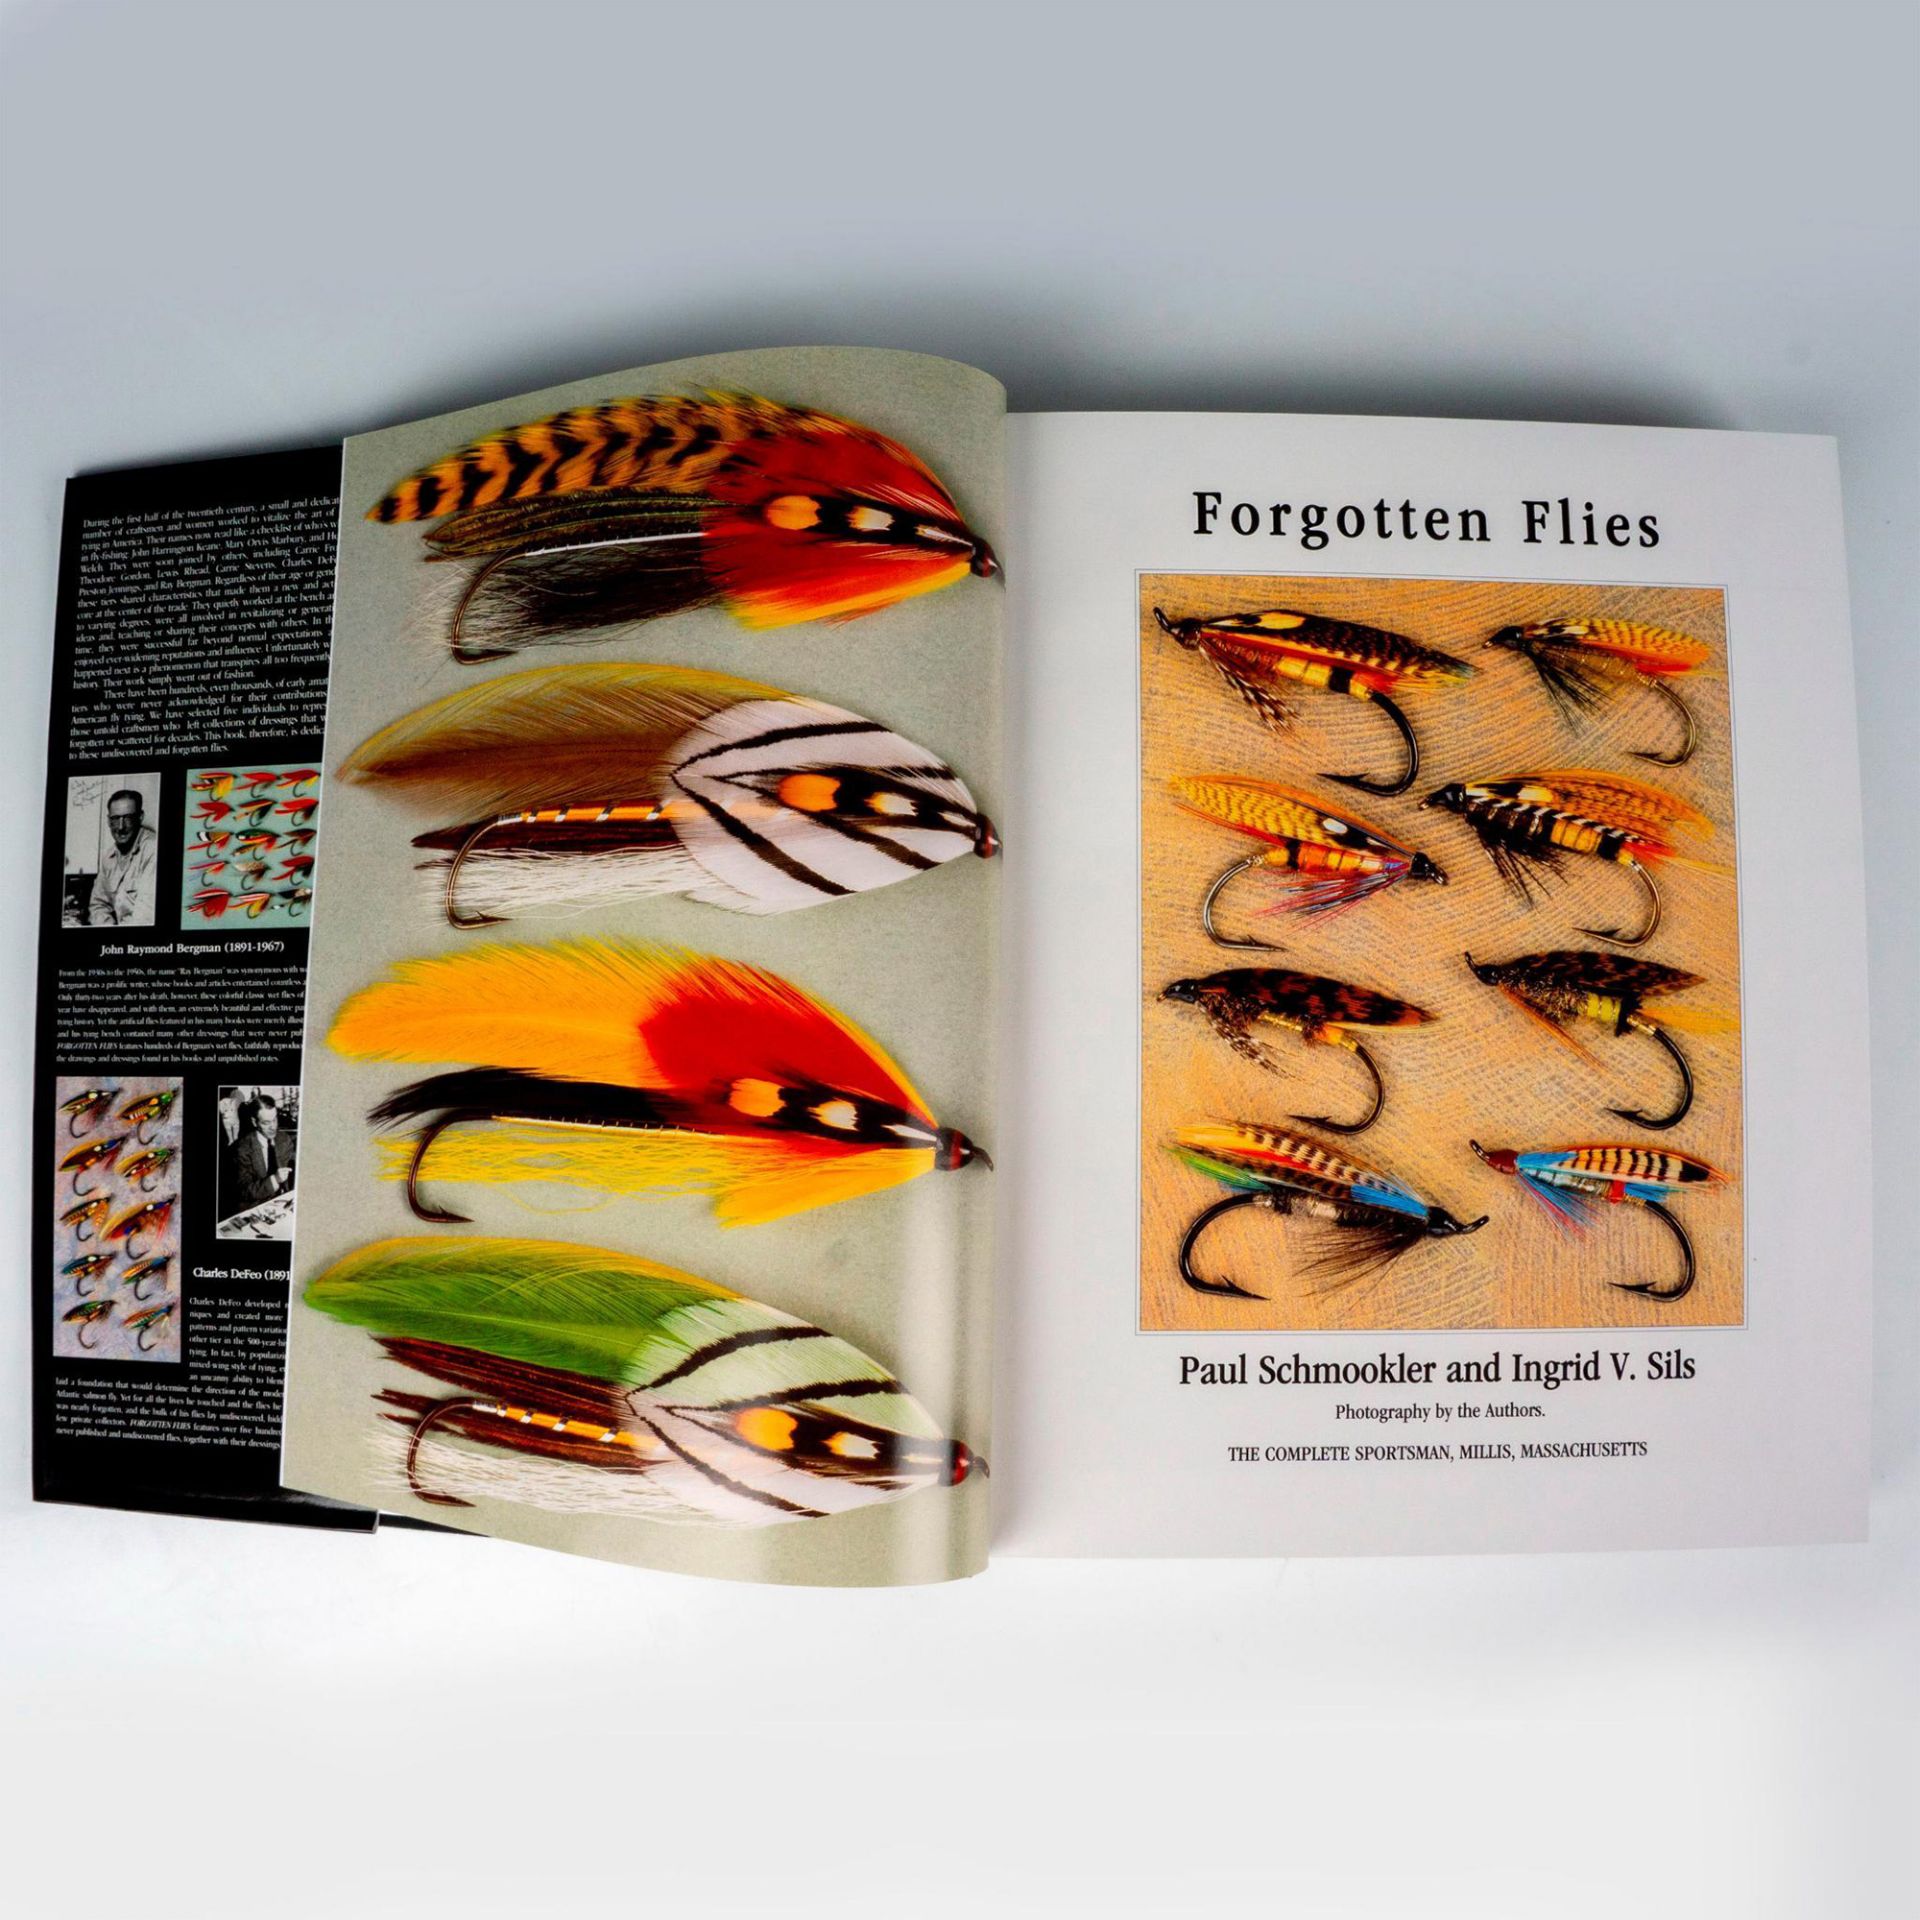 1st Edition Forgotten Flies by Paul Schmookler - Image 3 of 3